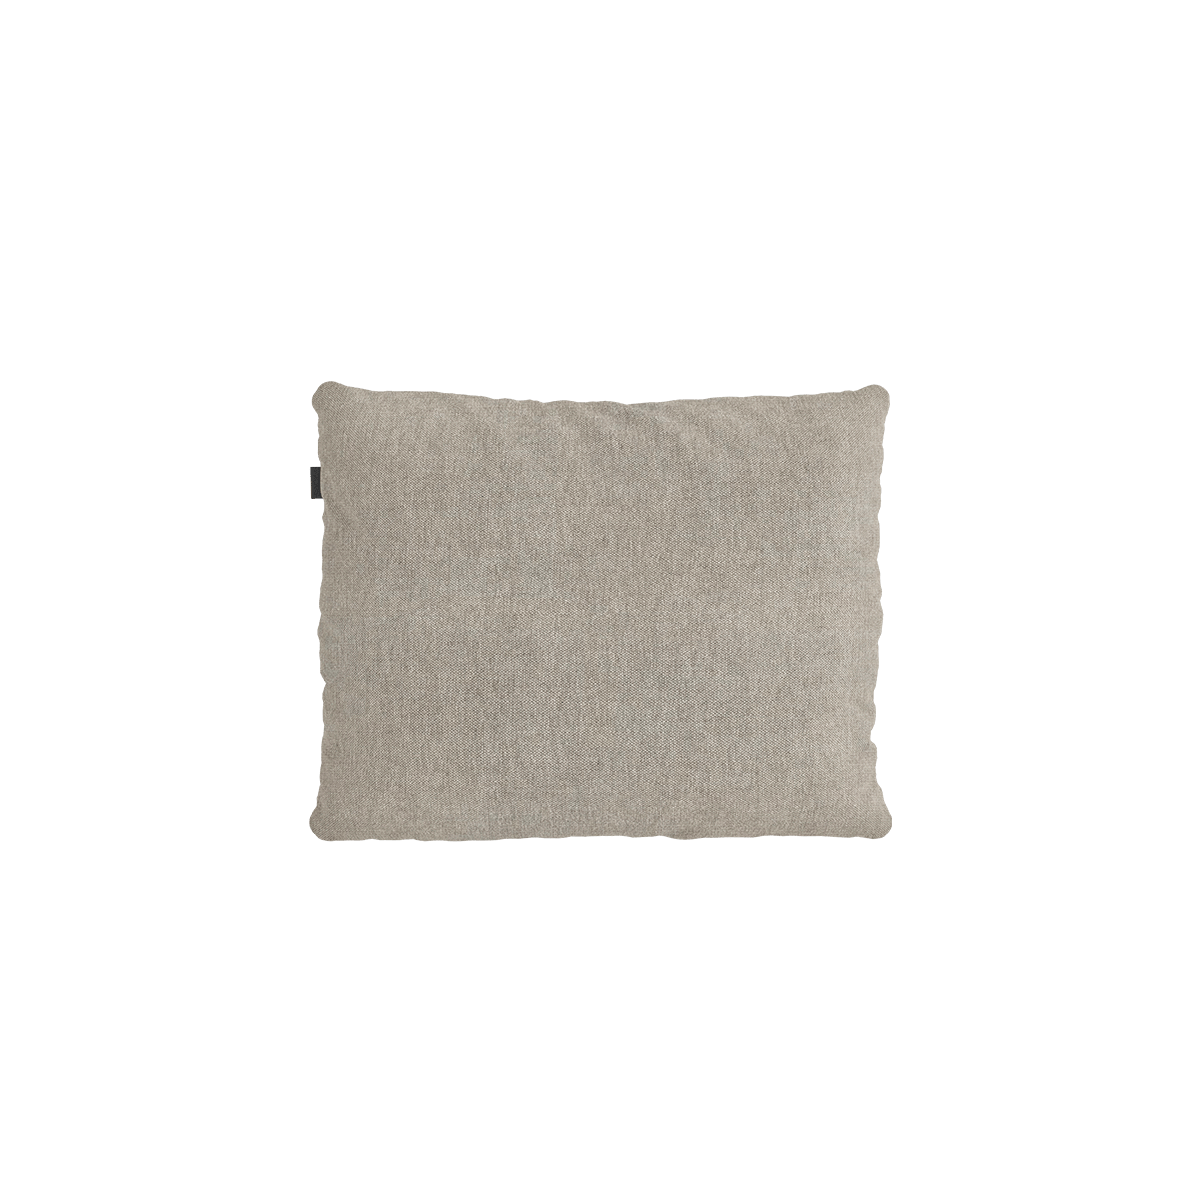 variant_8583405% | Cobana Cushion [Contract] - Kirra Sand | SACKit